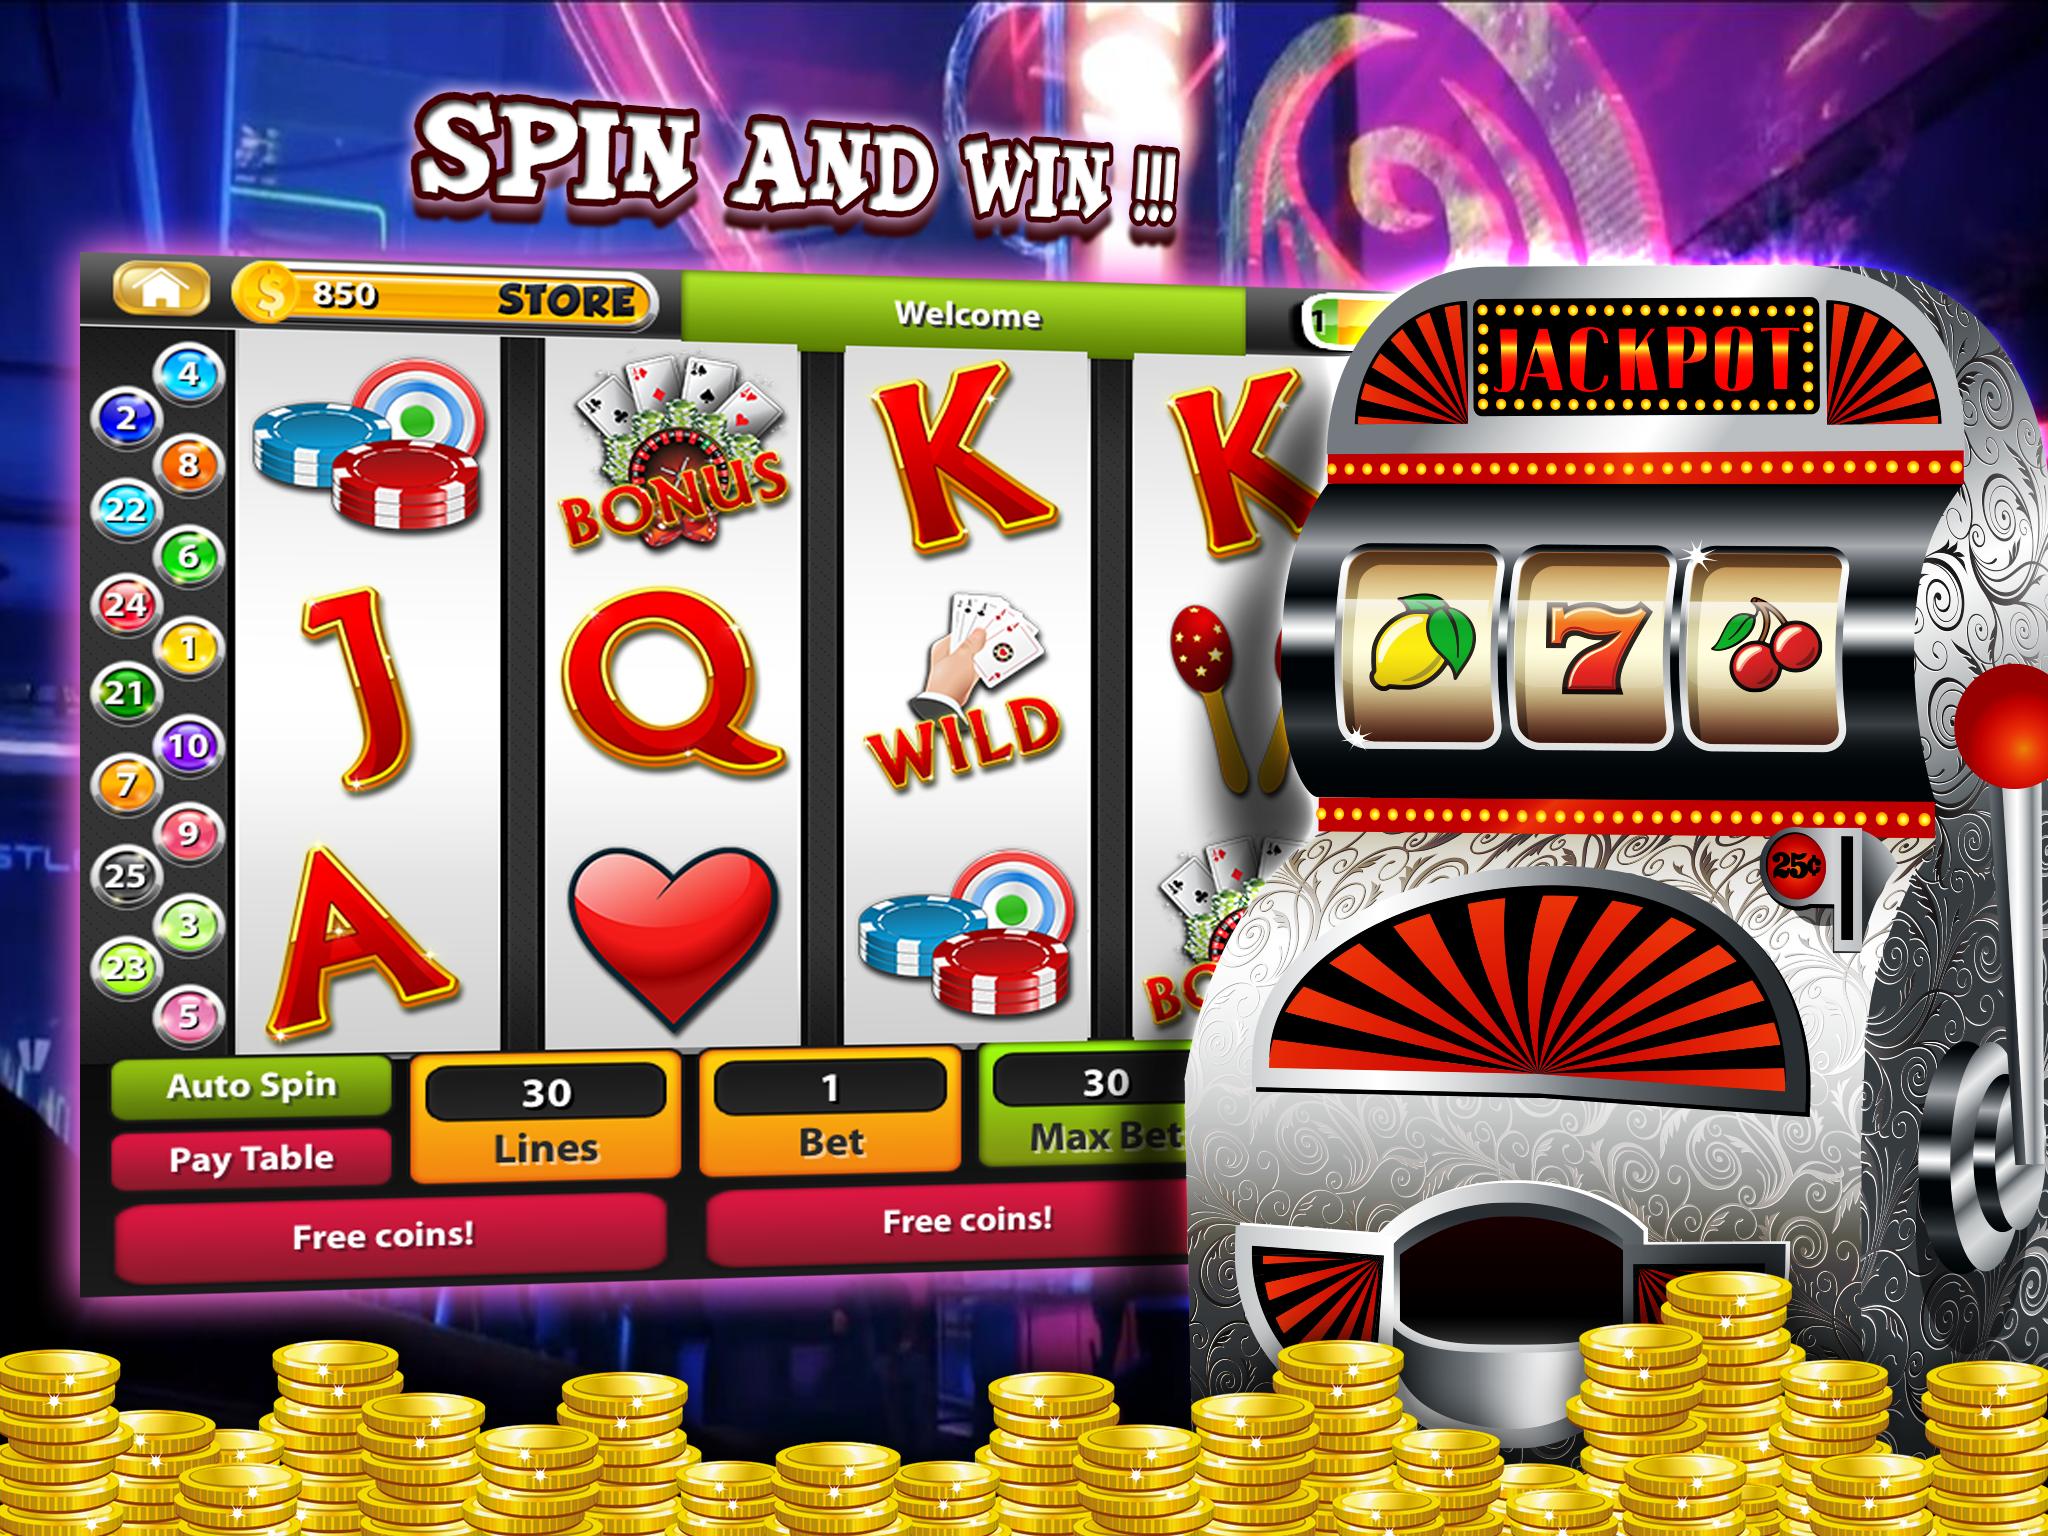 Casino online slot machine слотмачинесонлине инфо 4 20 столото проверить